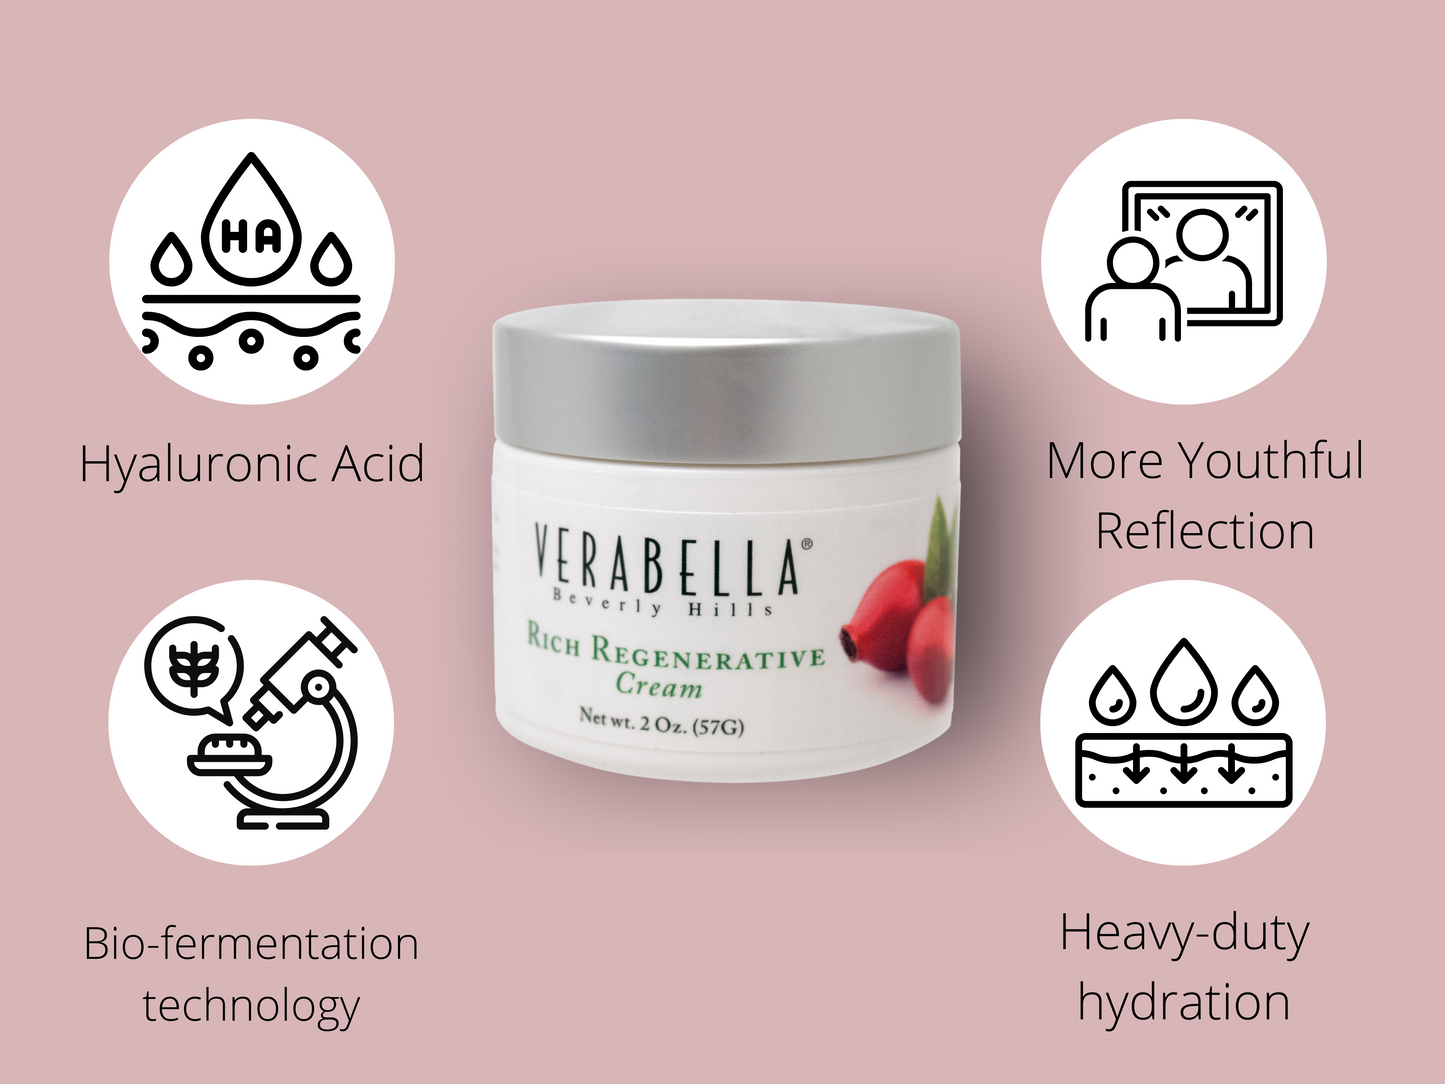 Verabella Rich Regenerative Cream is heavy-duty hydration